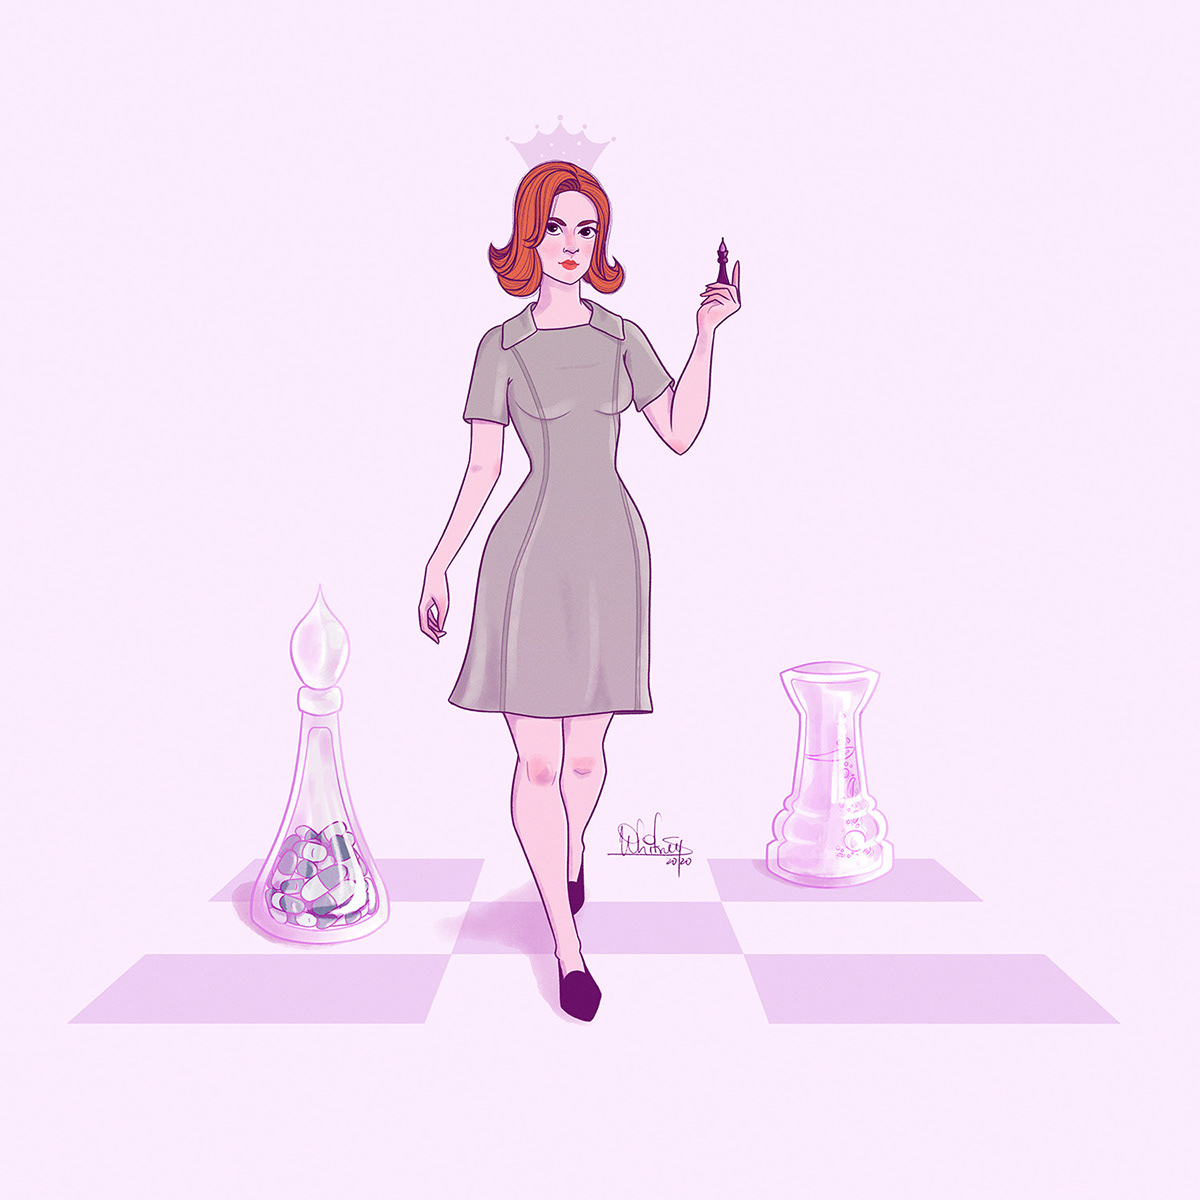 art direction  Beth Harmon character illustration chess Netflix Netflix series queen The Queen's Gambit Visual Development